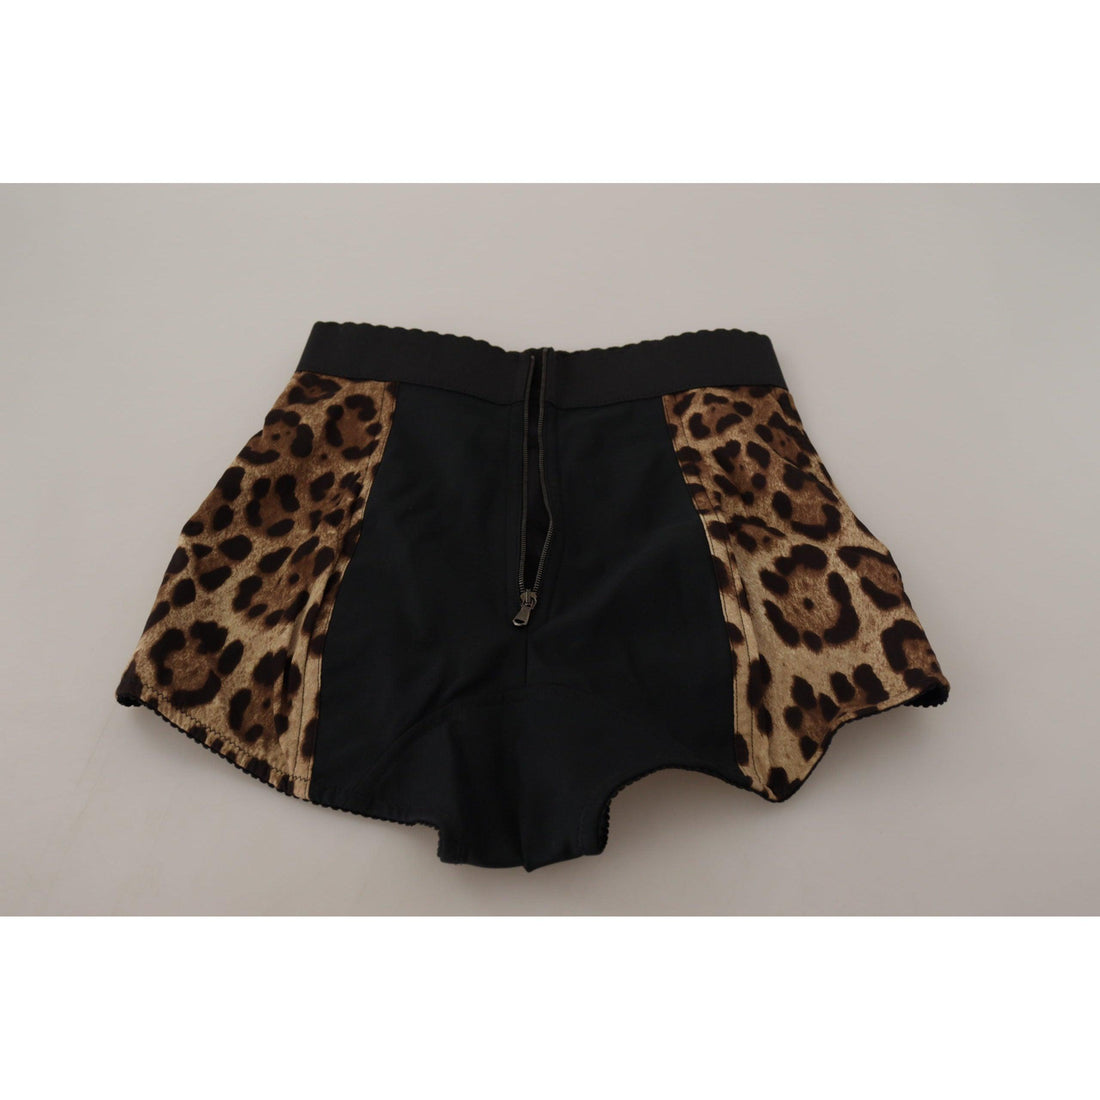 Dolce & Gabbana Leopard Print High Waist Hot Pants Shorts